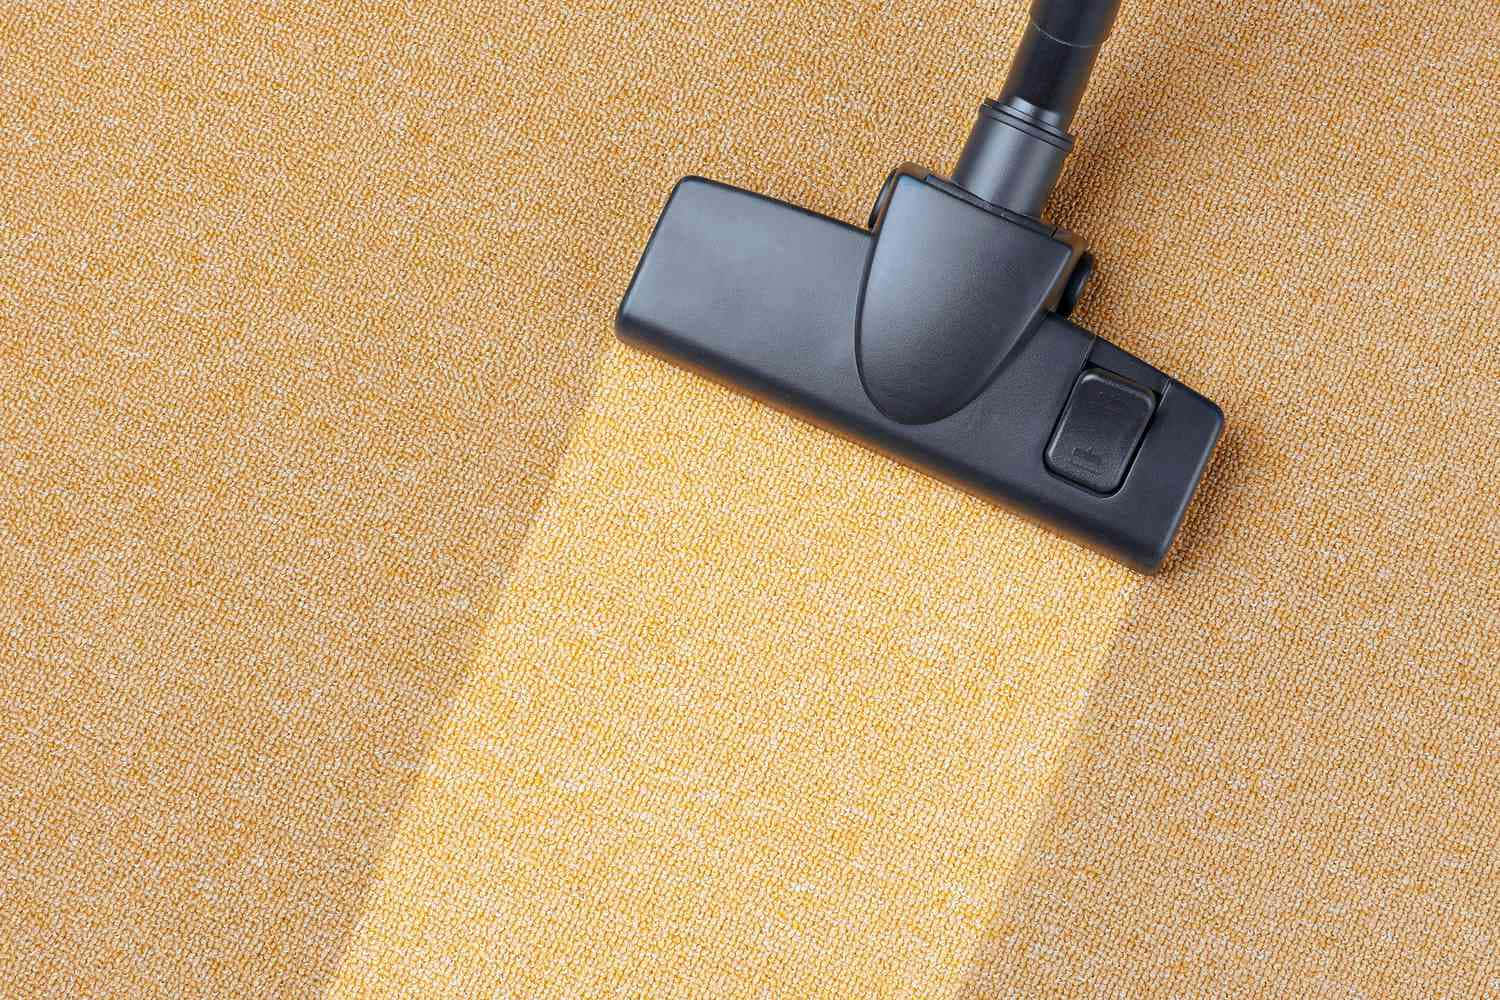 Cleaning Vacuum Cleaner Brown Carpet